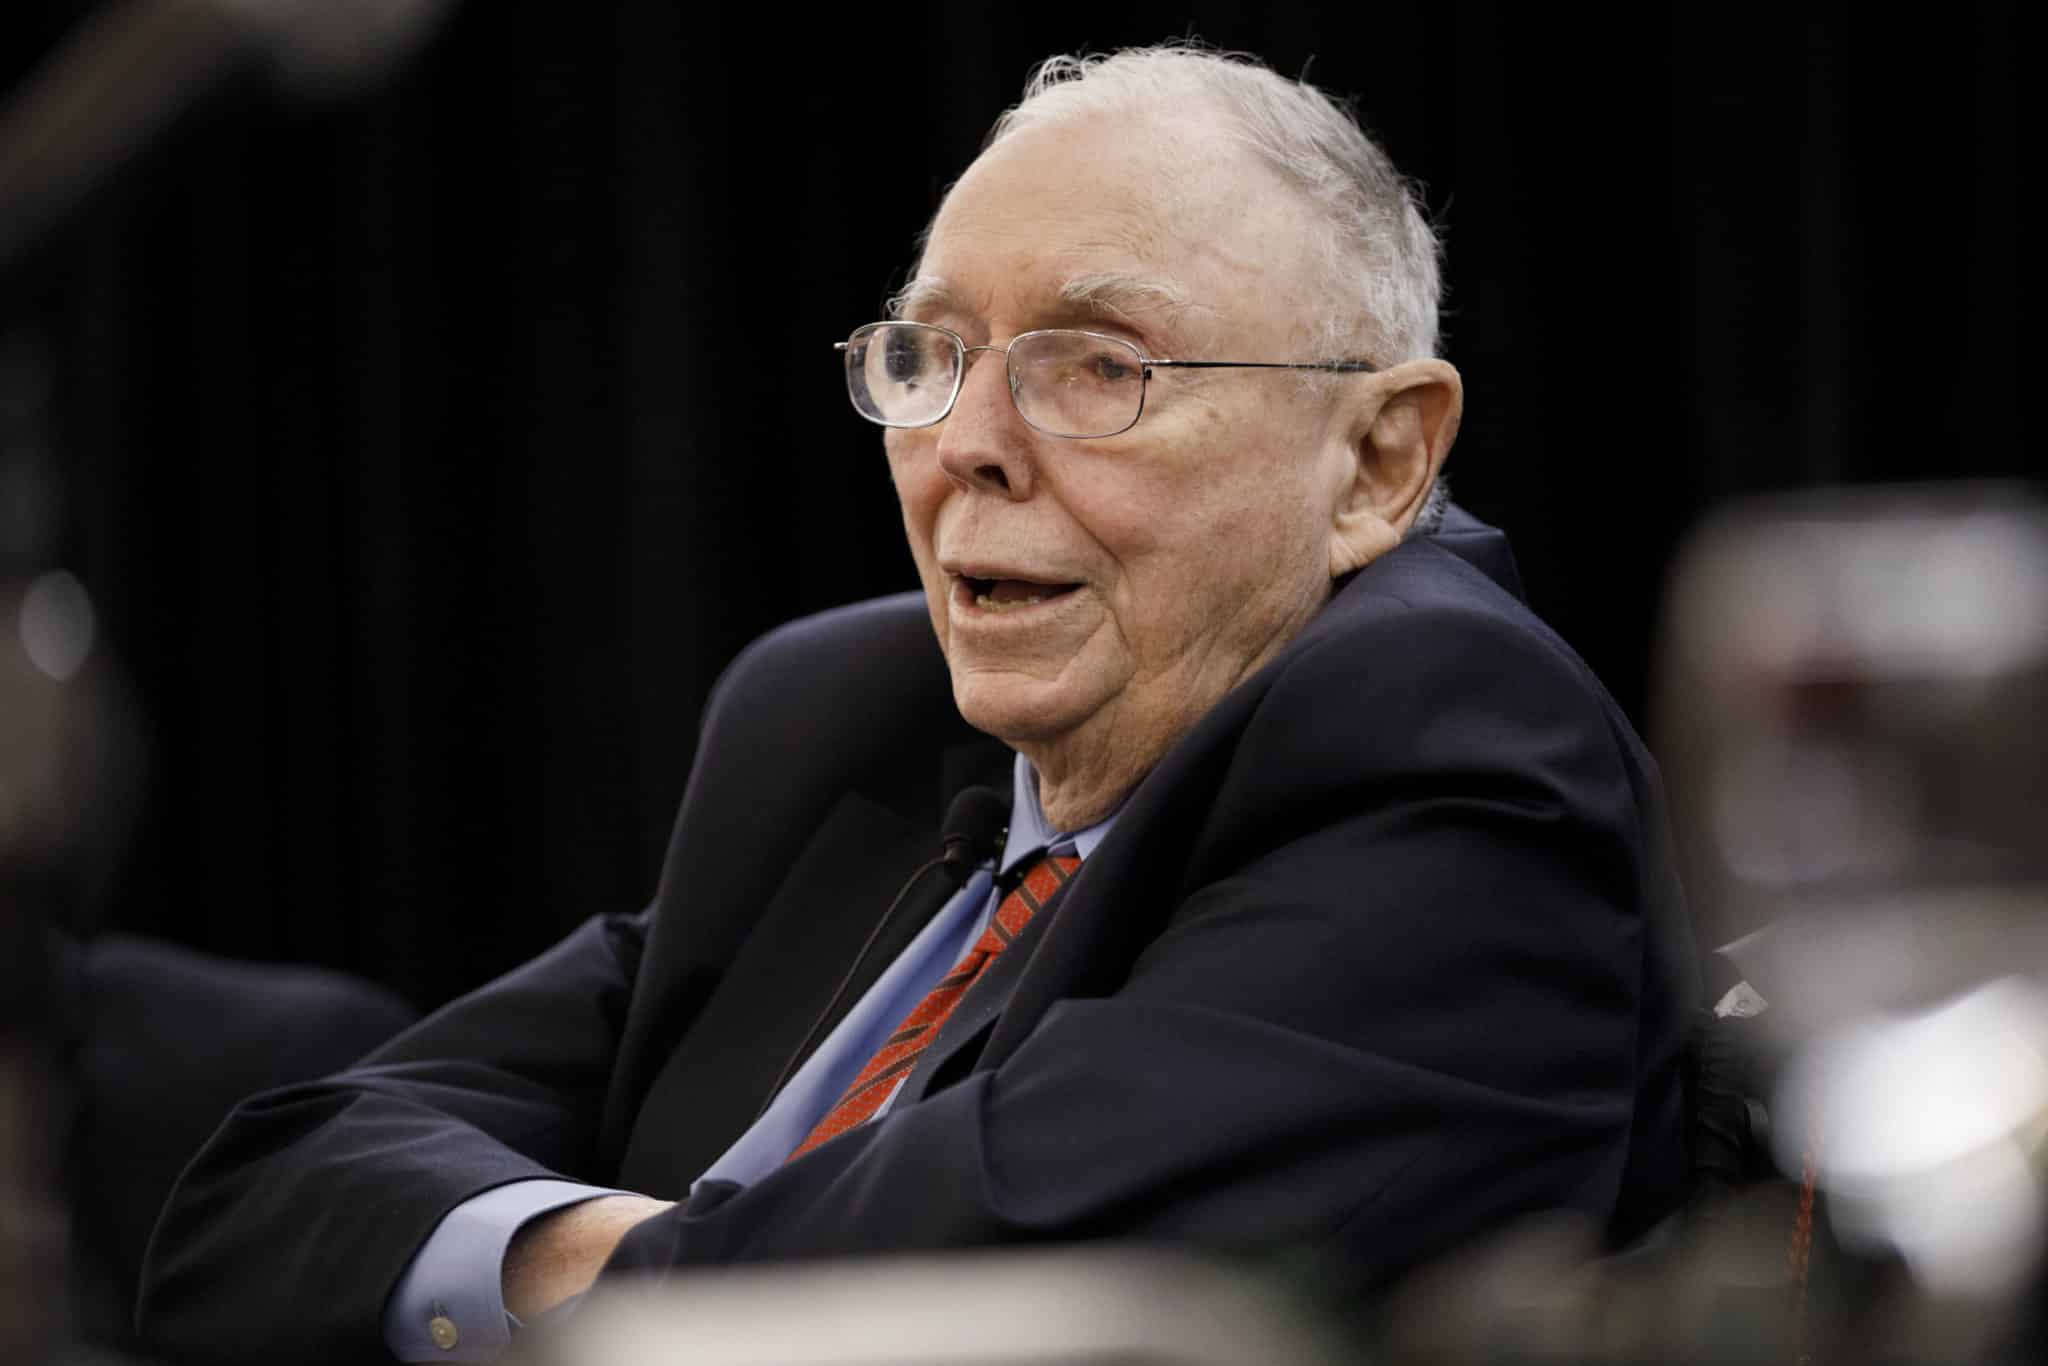 Charlie Munger, investing genius and Warren Buffett’s right-hand man, dies at age 99